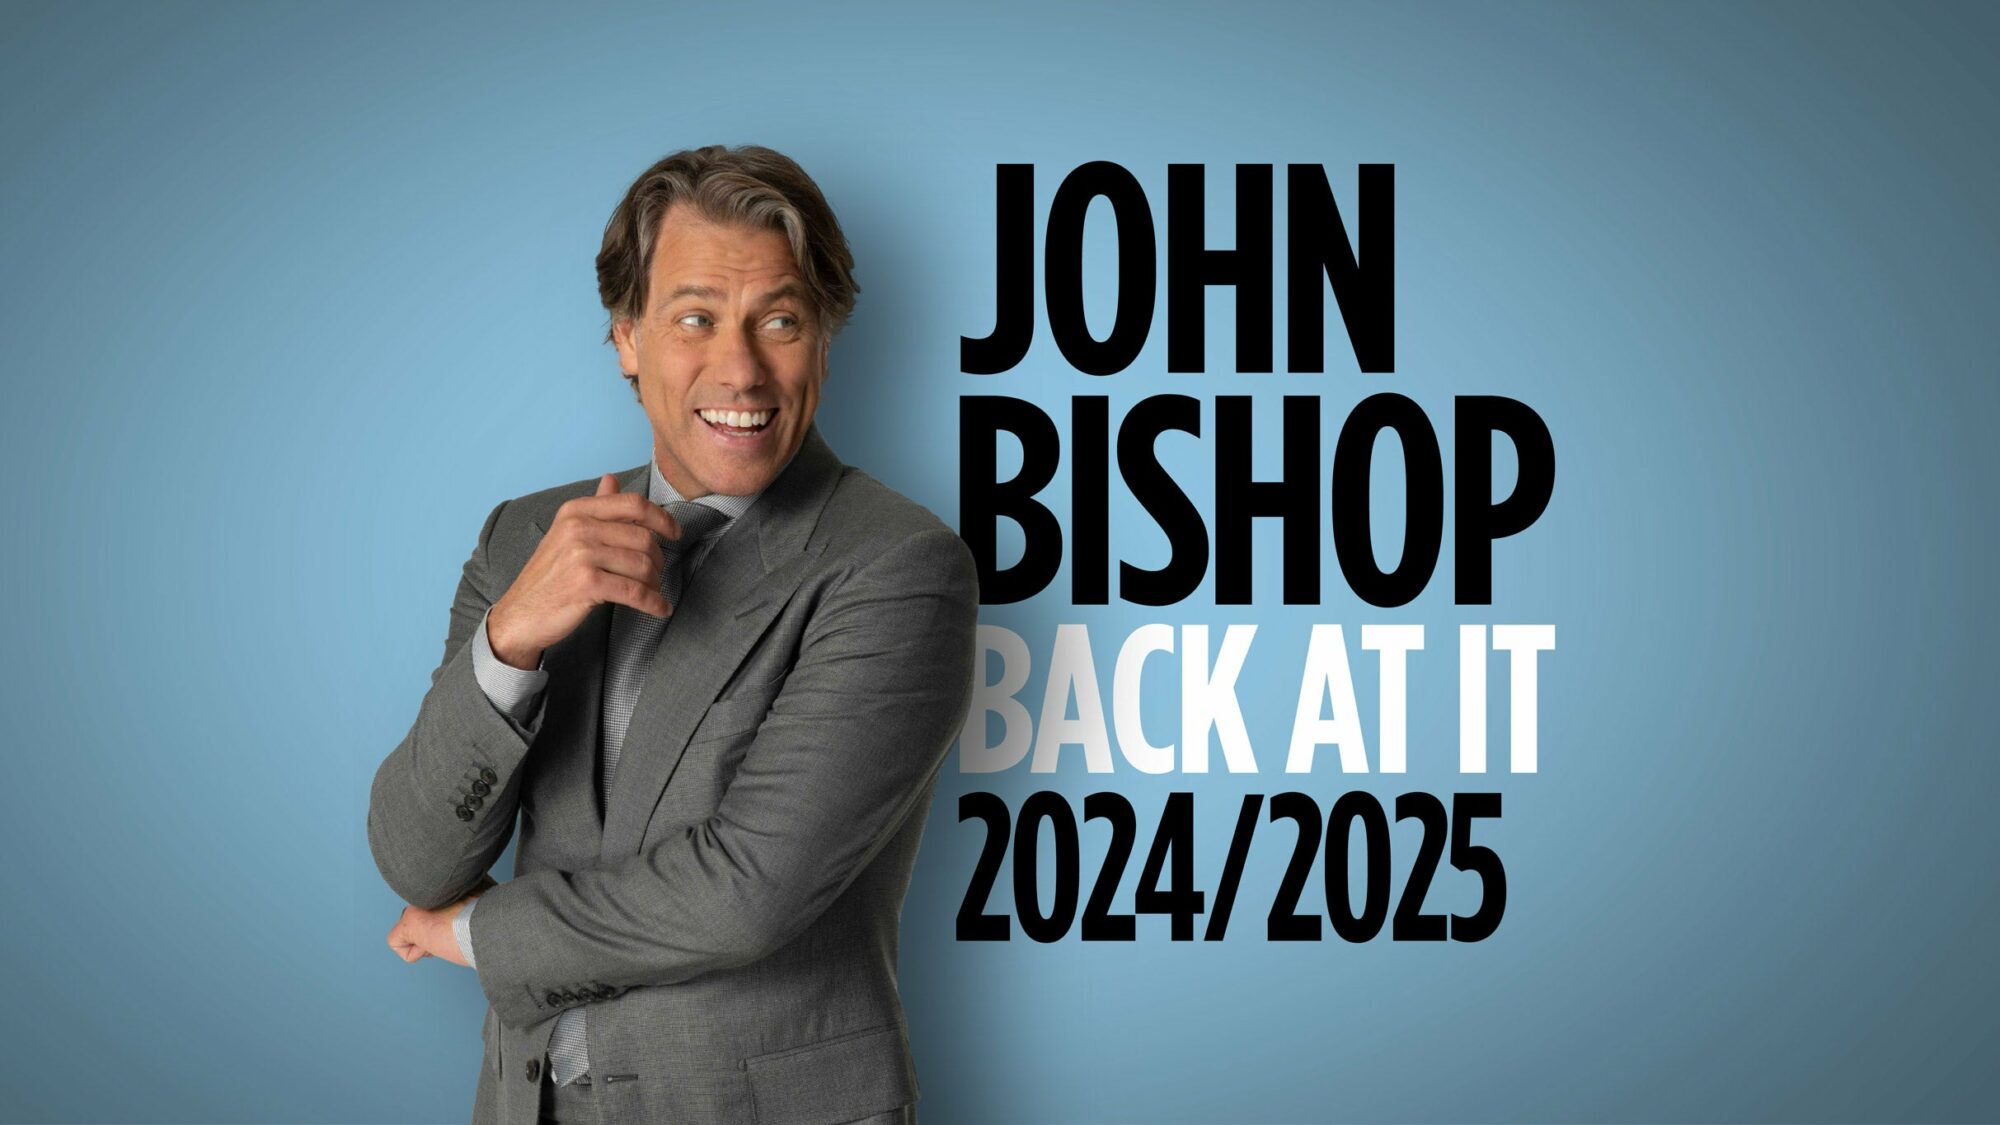 John Bishop – BACK AT IT at St Georges Hall, Bradford, Bradford